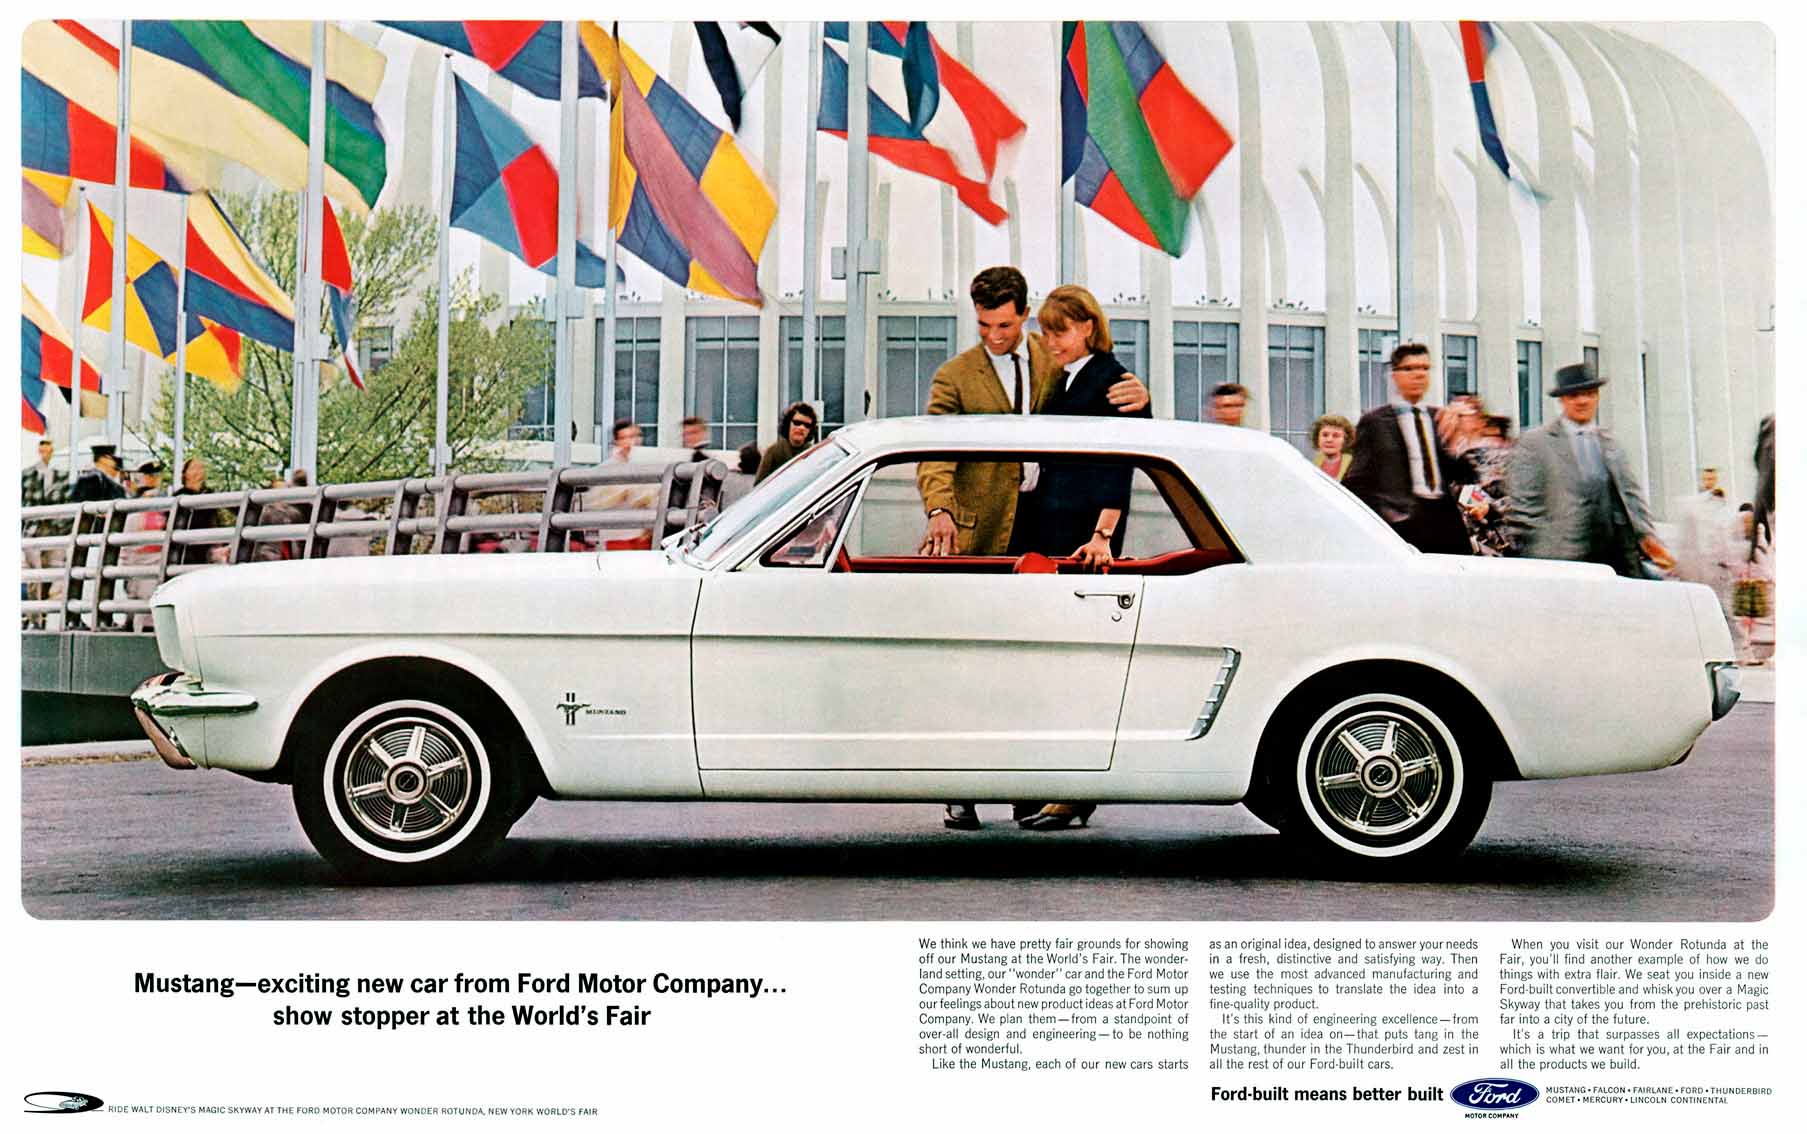 Immagini commerciali della Mustang del 1964 Hardtop